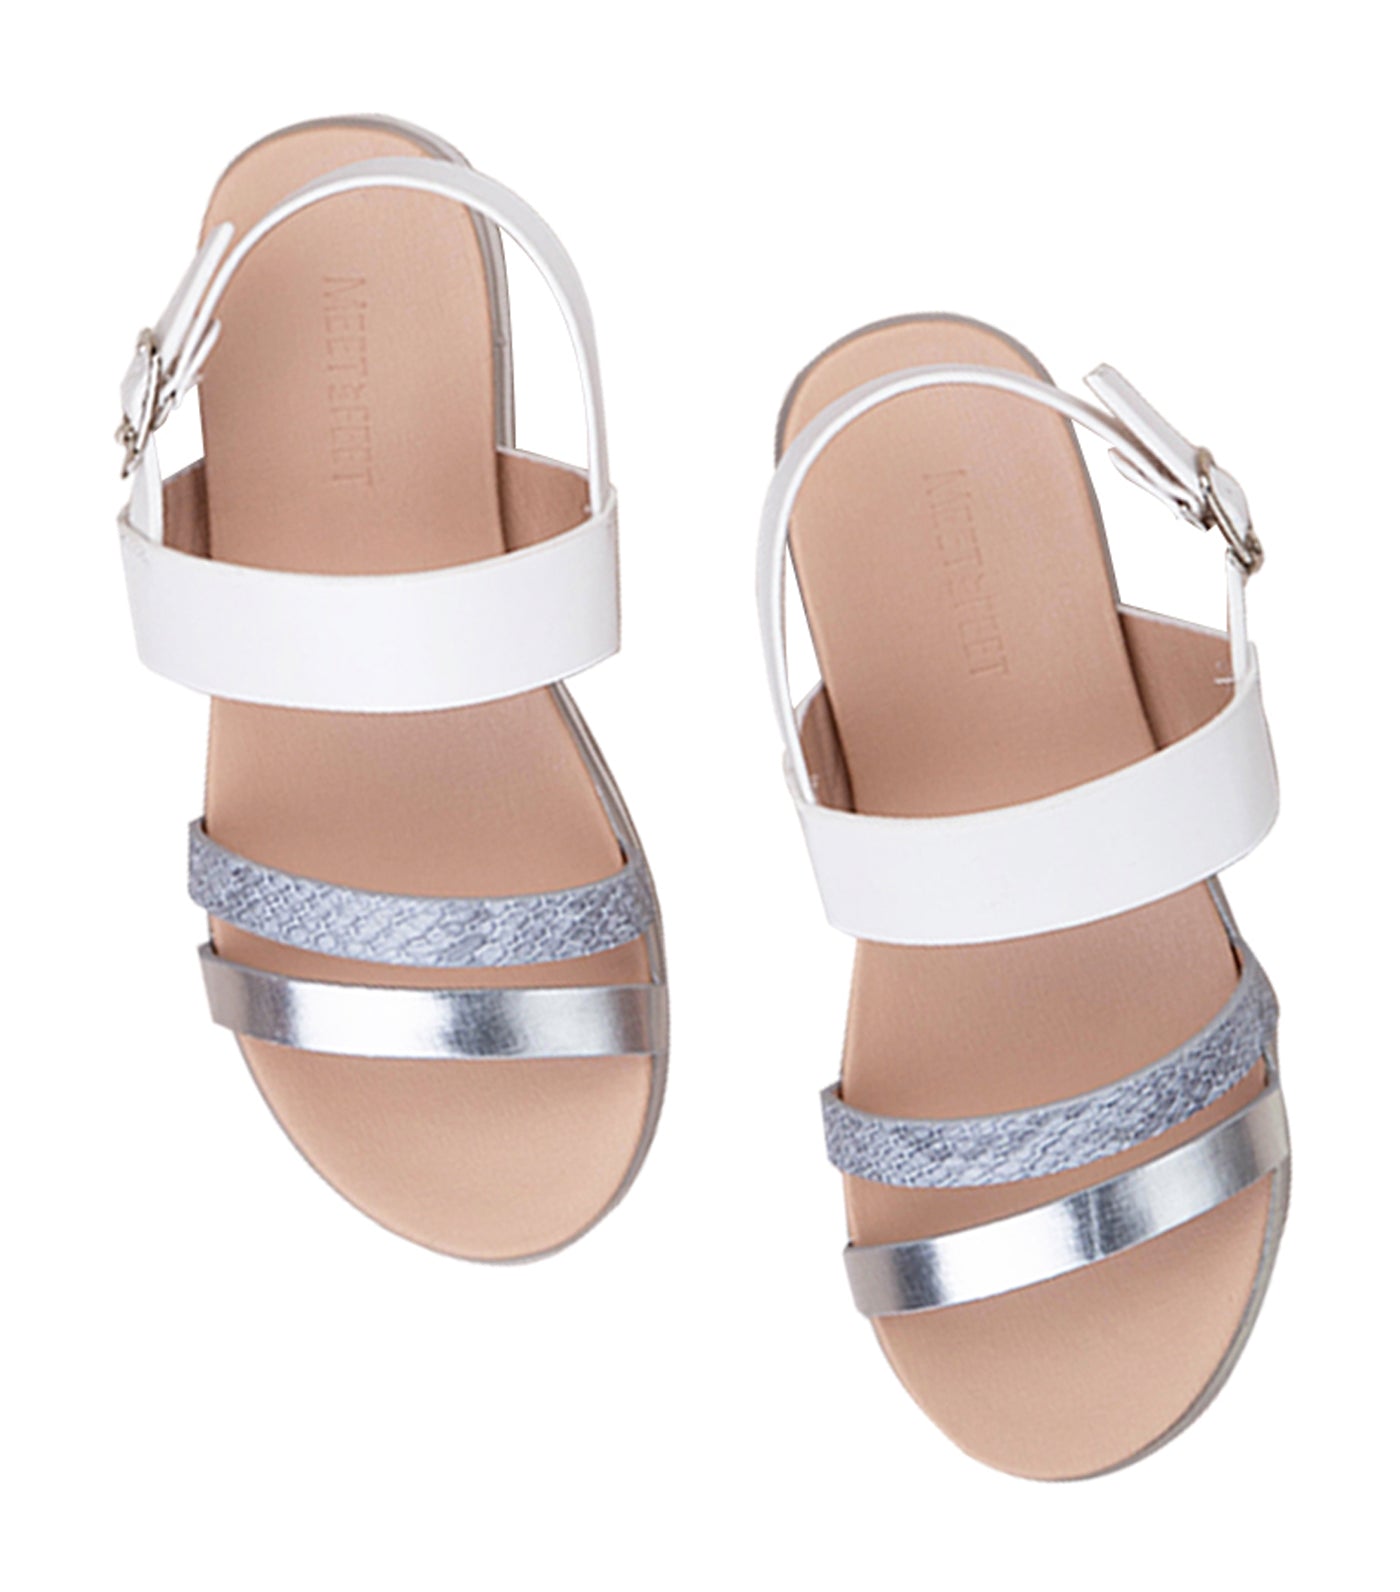 Blessy Kids Sandals for Girls - Silver